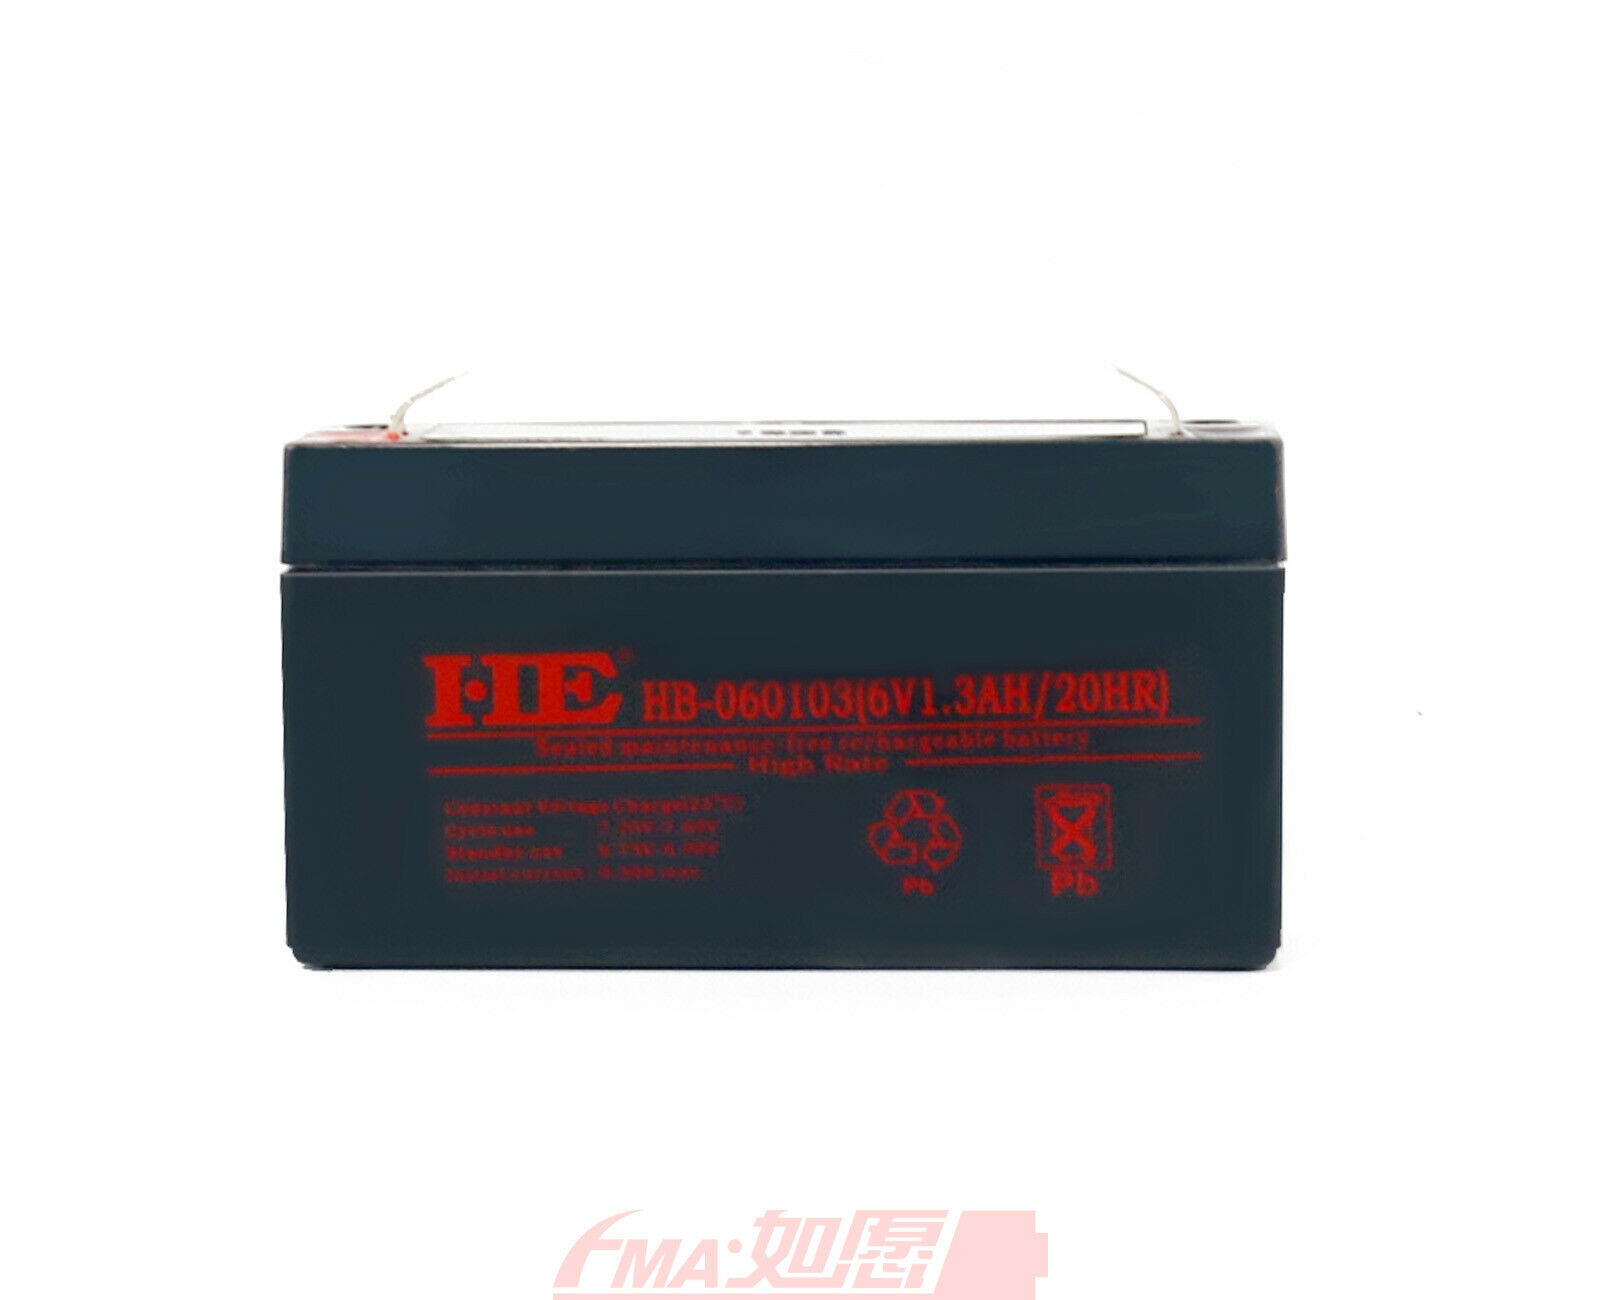 2x SLA Sealed Lead Acid Battery 6V 1.3Ah to Exit Backup power Emergency light